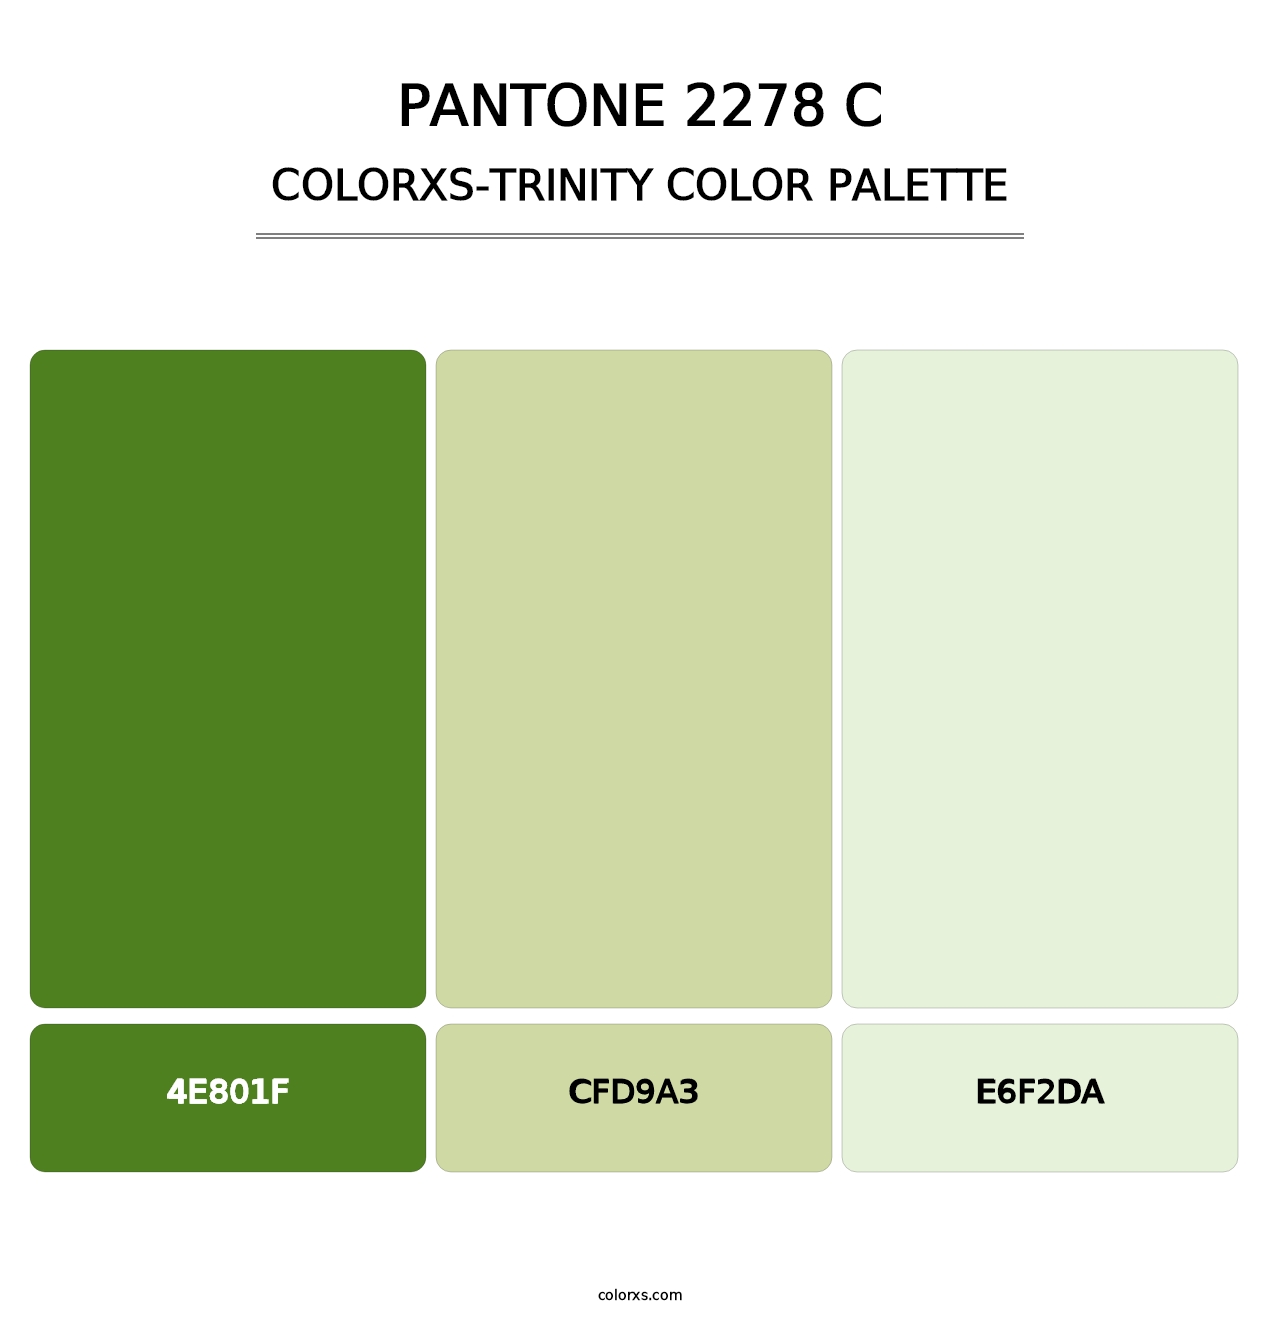 PANTONE 2278 C - Colorxs Trinity Palette